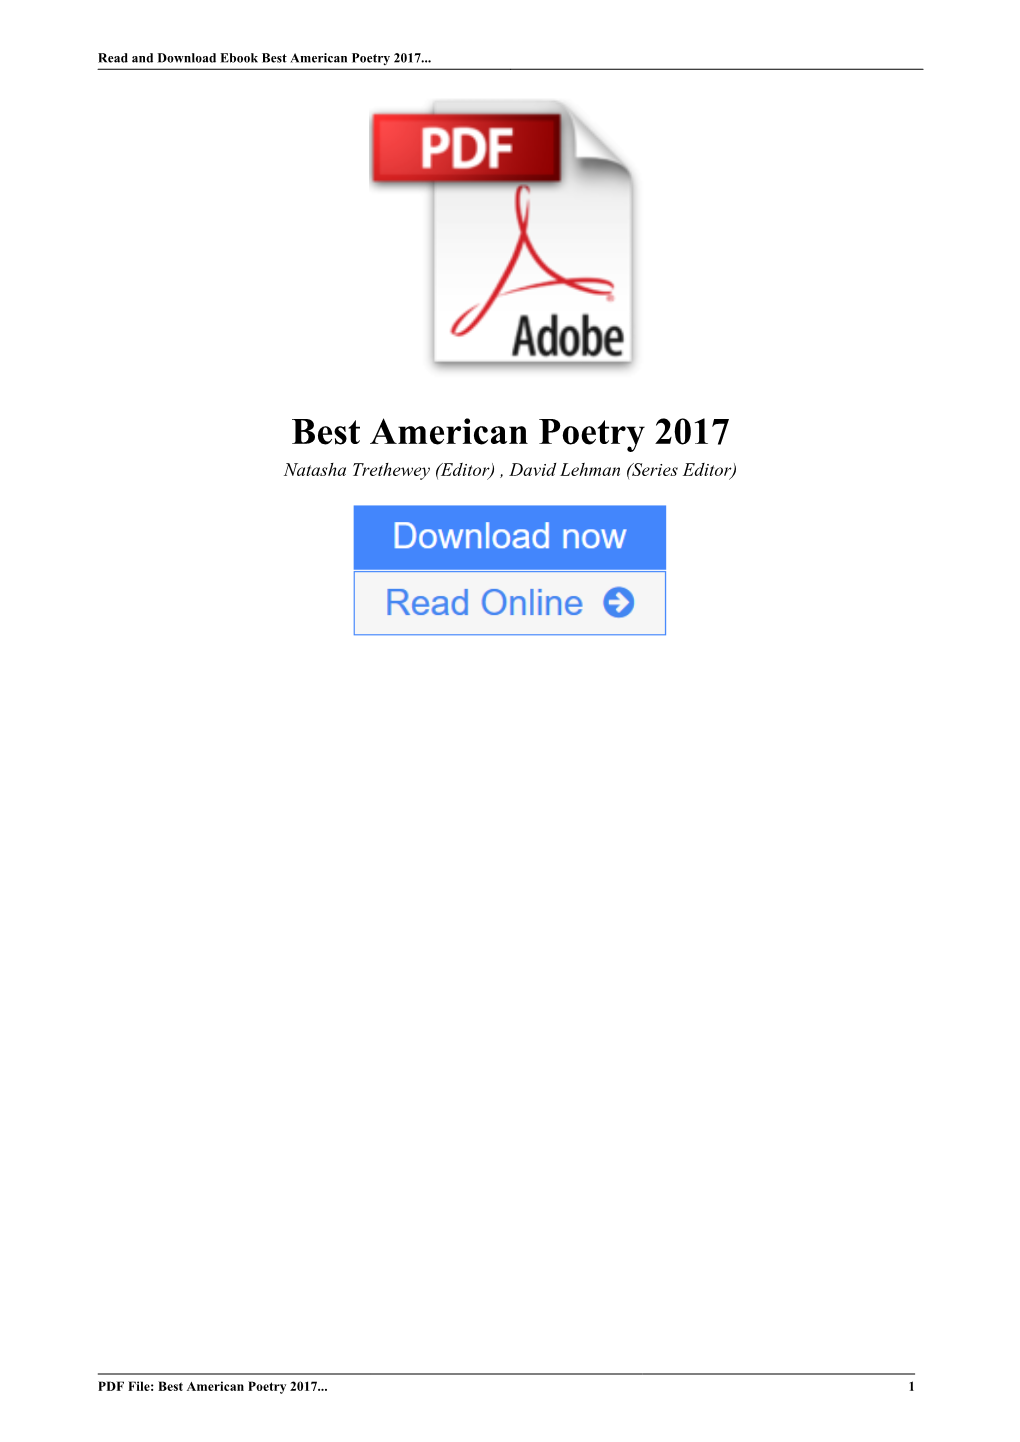 Best American Poetry 2017 by Natasha Trethewey (Editor) , David